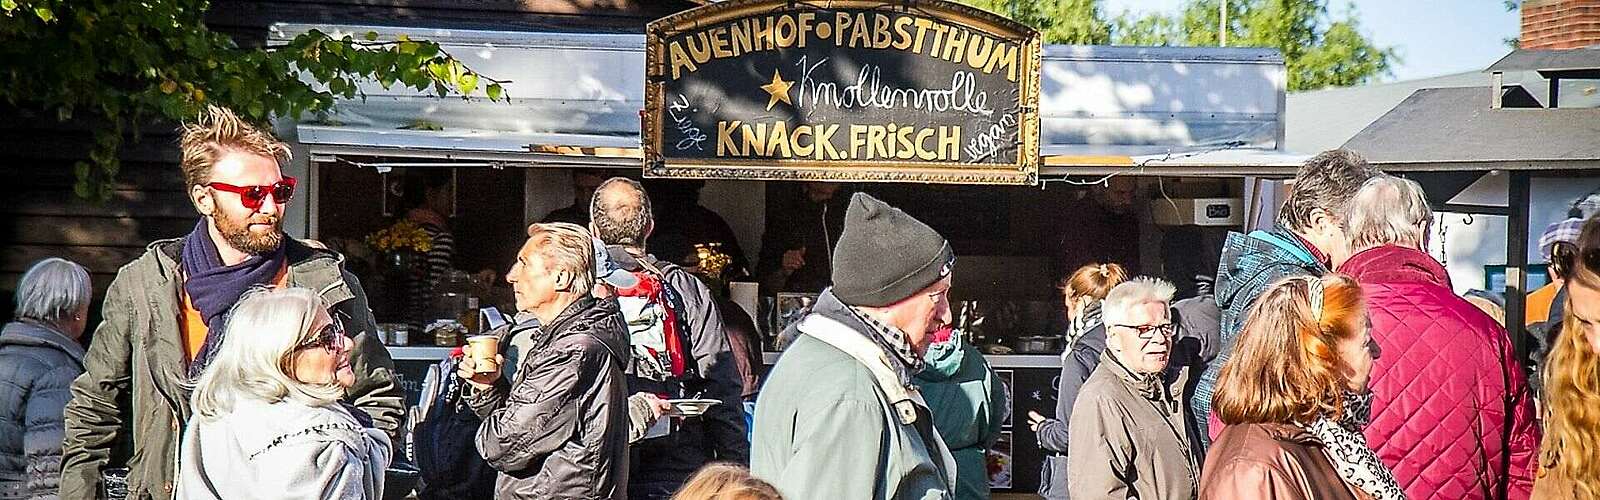 Foodtruck Knack.frisch,
        
    

        Foto: Knack.frisch Neuruppin/Kein Urheber bekannt